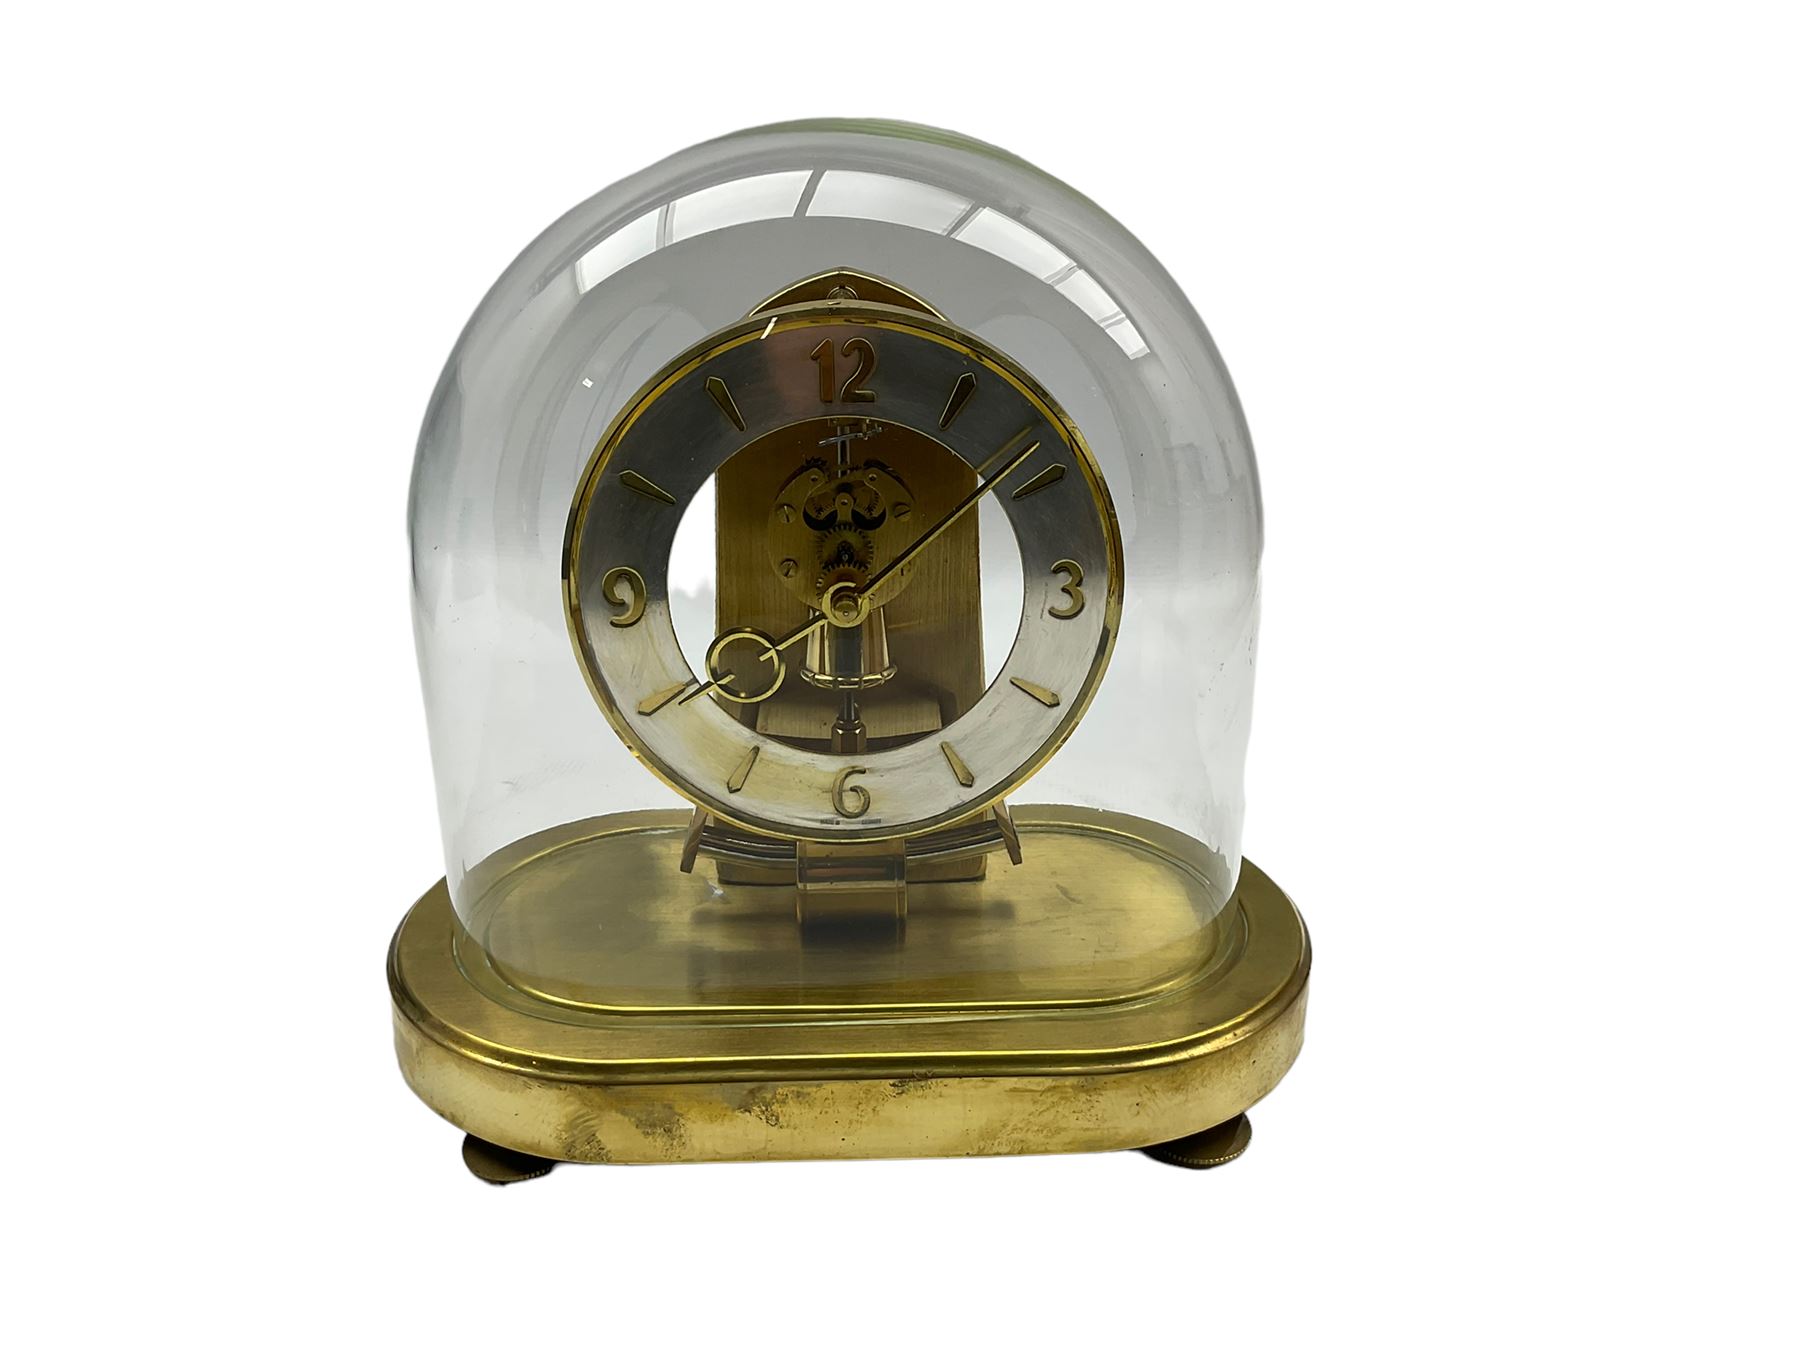 German 1970's �Schatz� battery operated mantle clock with an oscillating pendulum under an oval glas